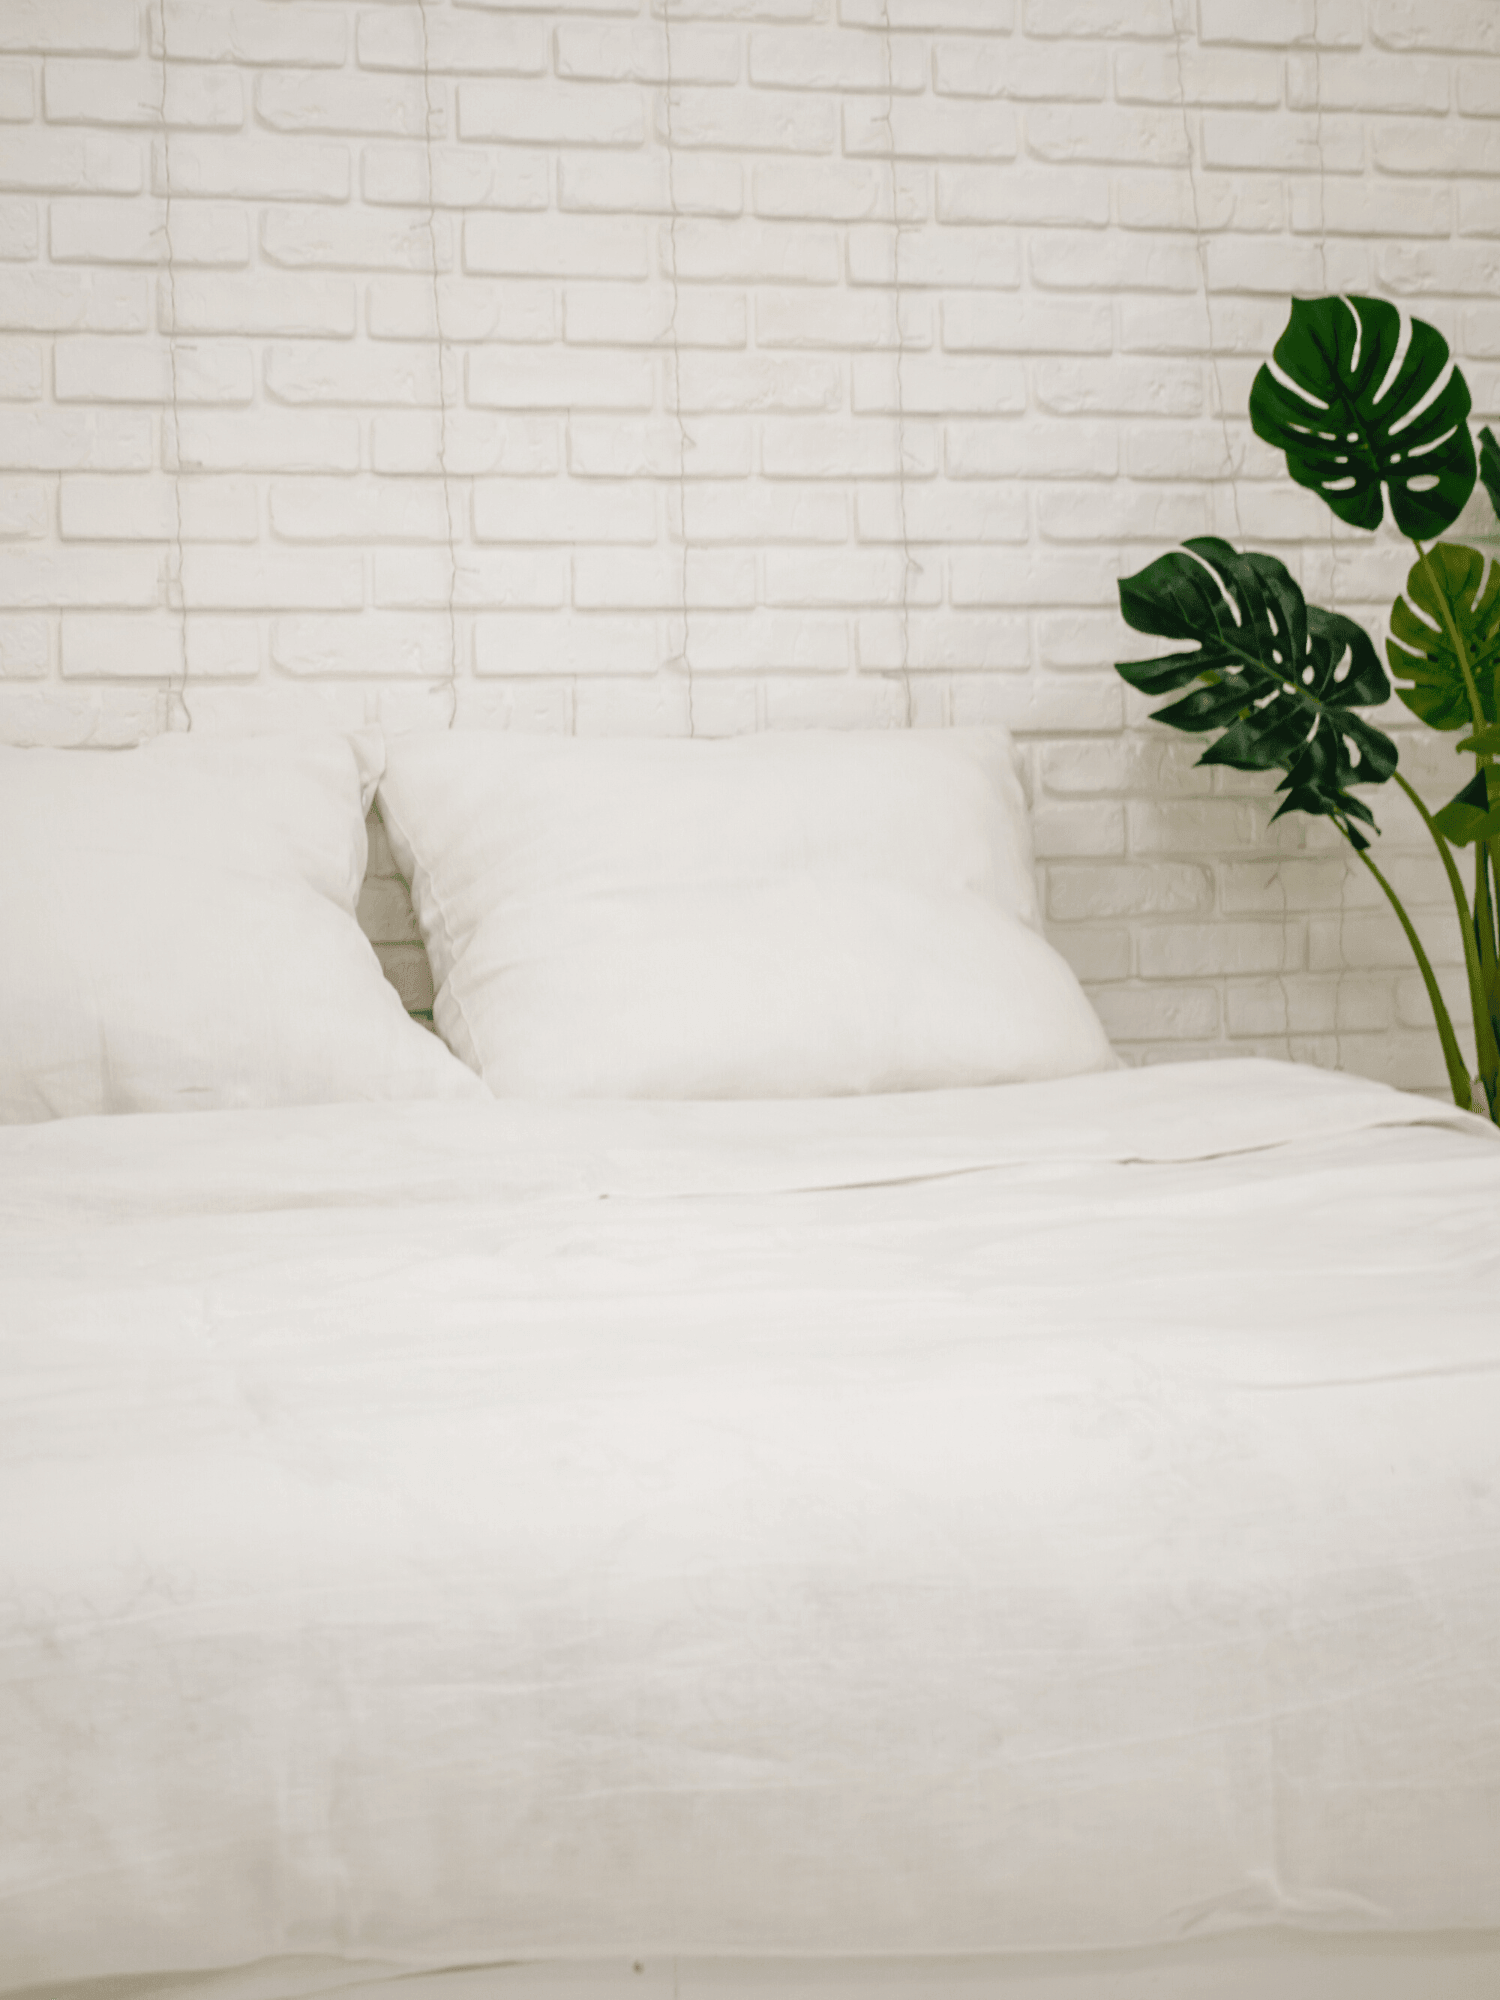 Creame White Soft Linen Bedding Set (The set includes 4 items of creame white color) - Bedroom, Linen bedding set - FlaxLin Eco Textiles